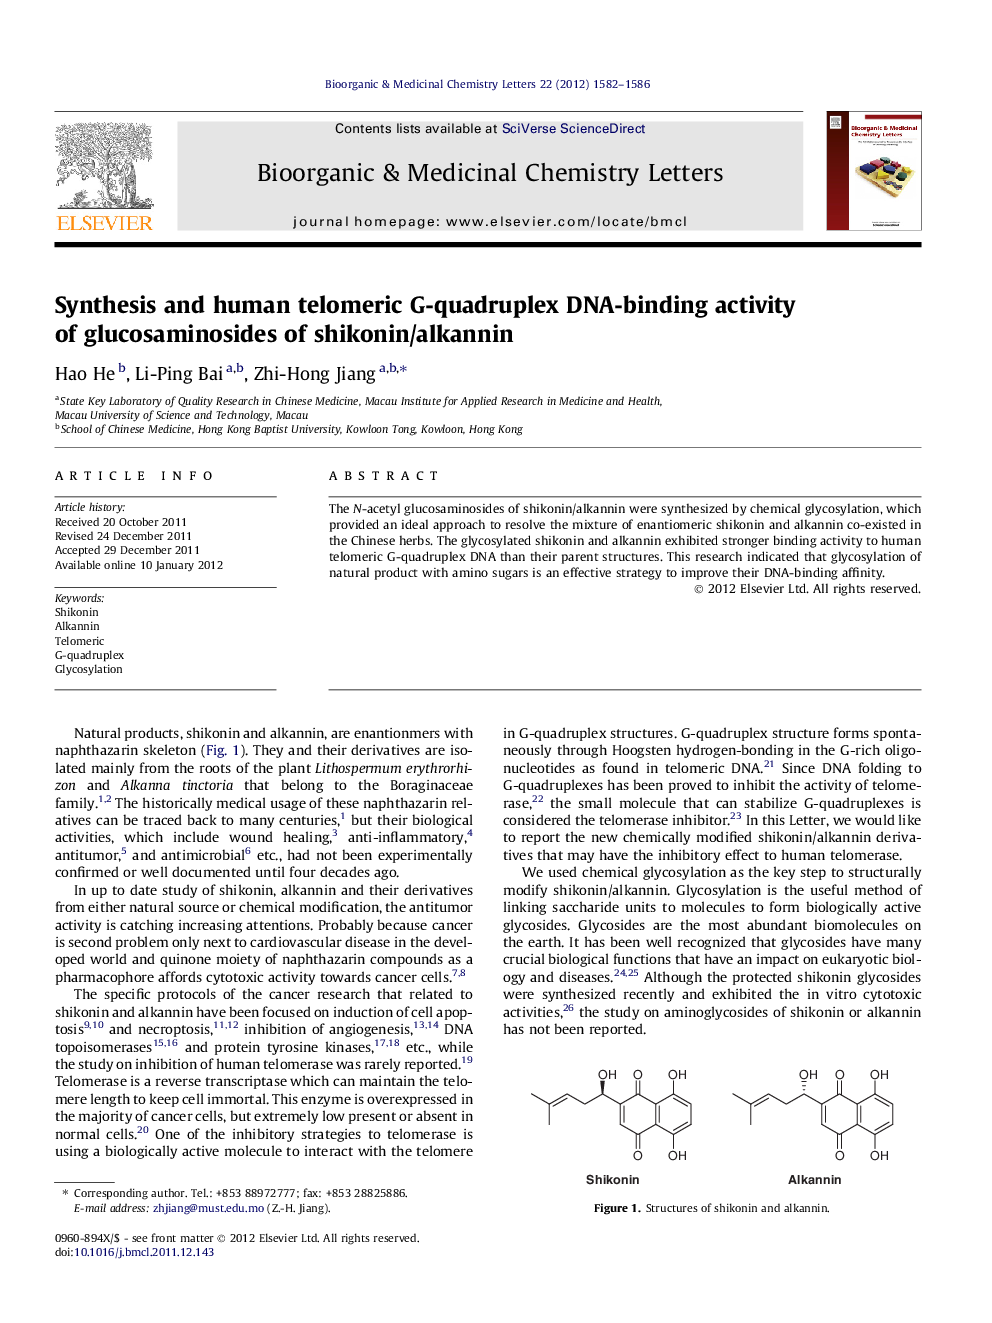 Synthesis and human telomeric G-quadruplex DNA-binding activity of glucosaminosides of shikonin/alkannin